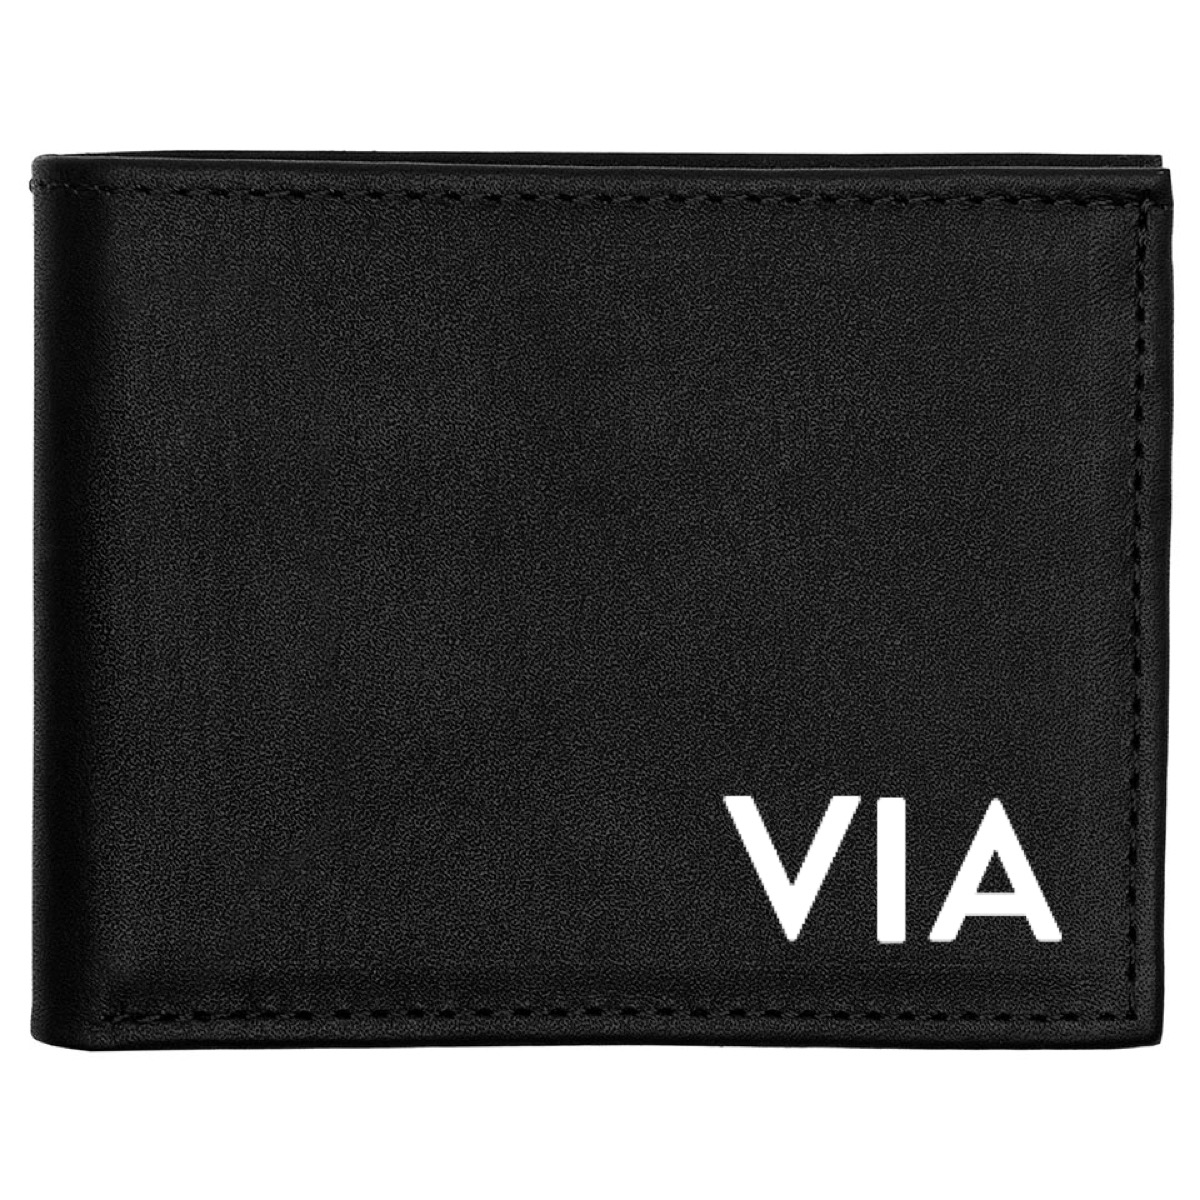 Personalizable billetera negra de piel